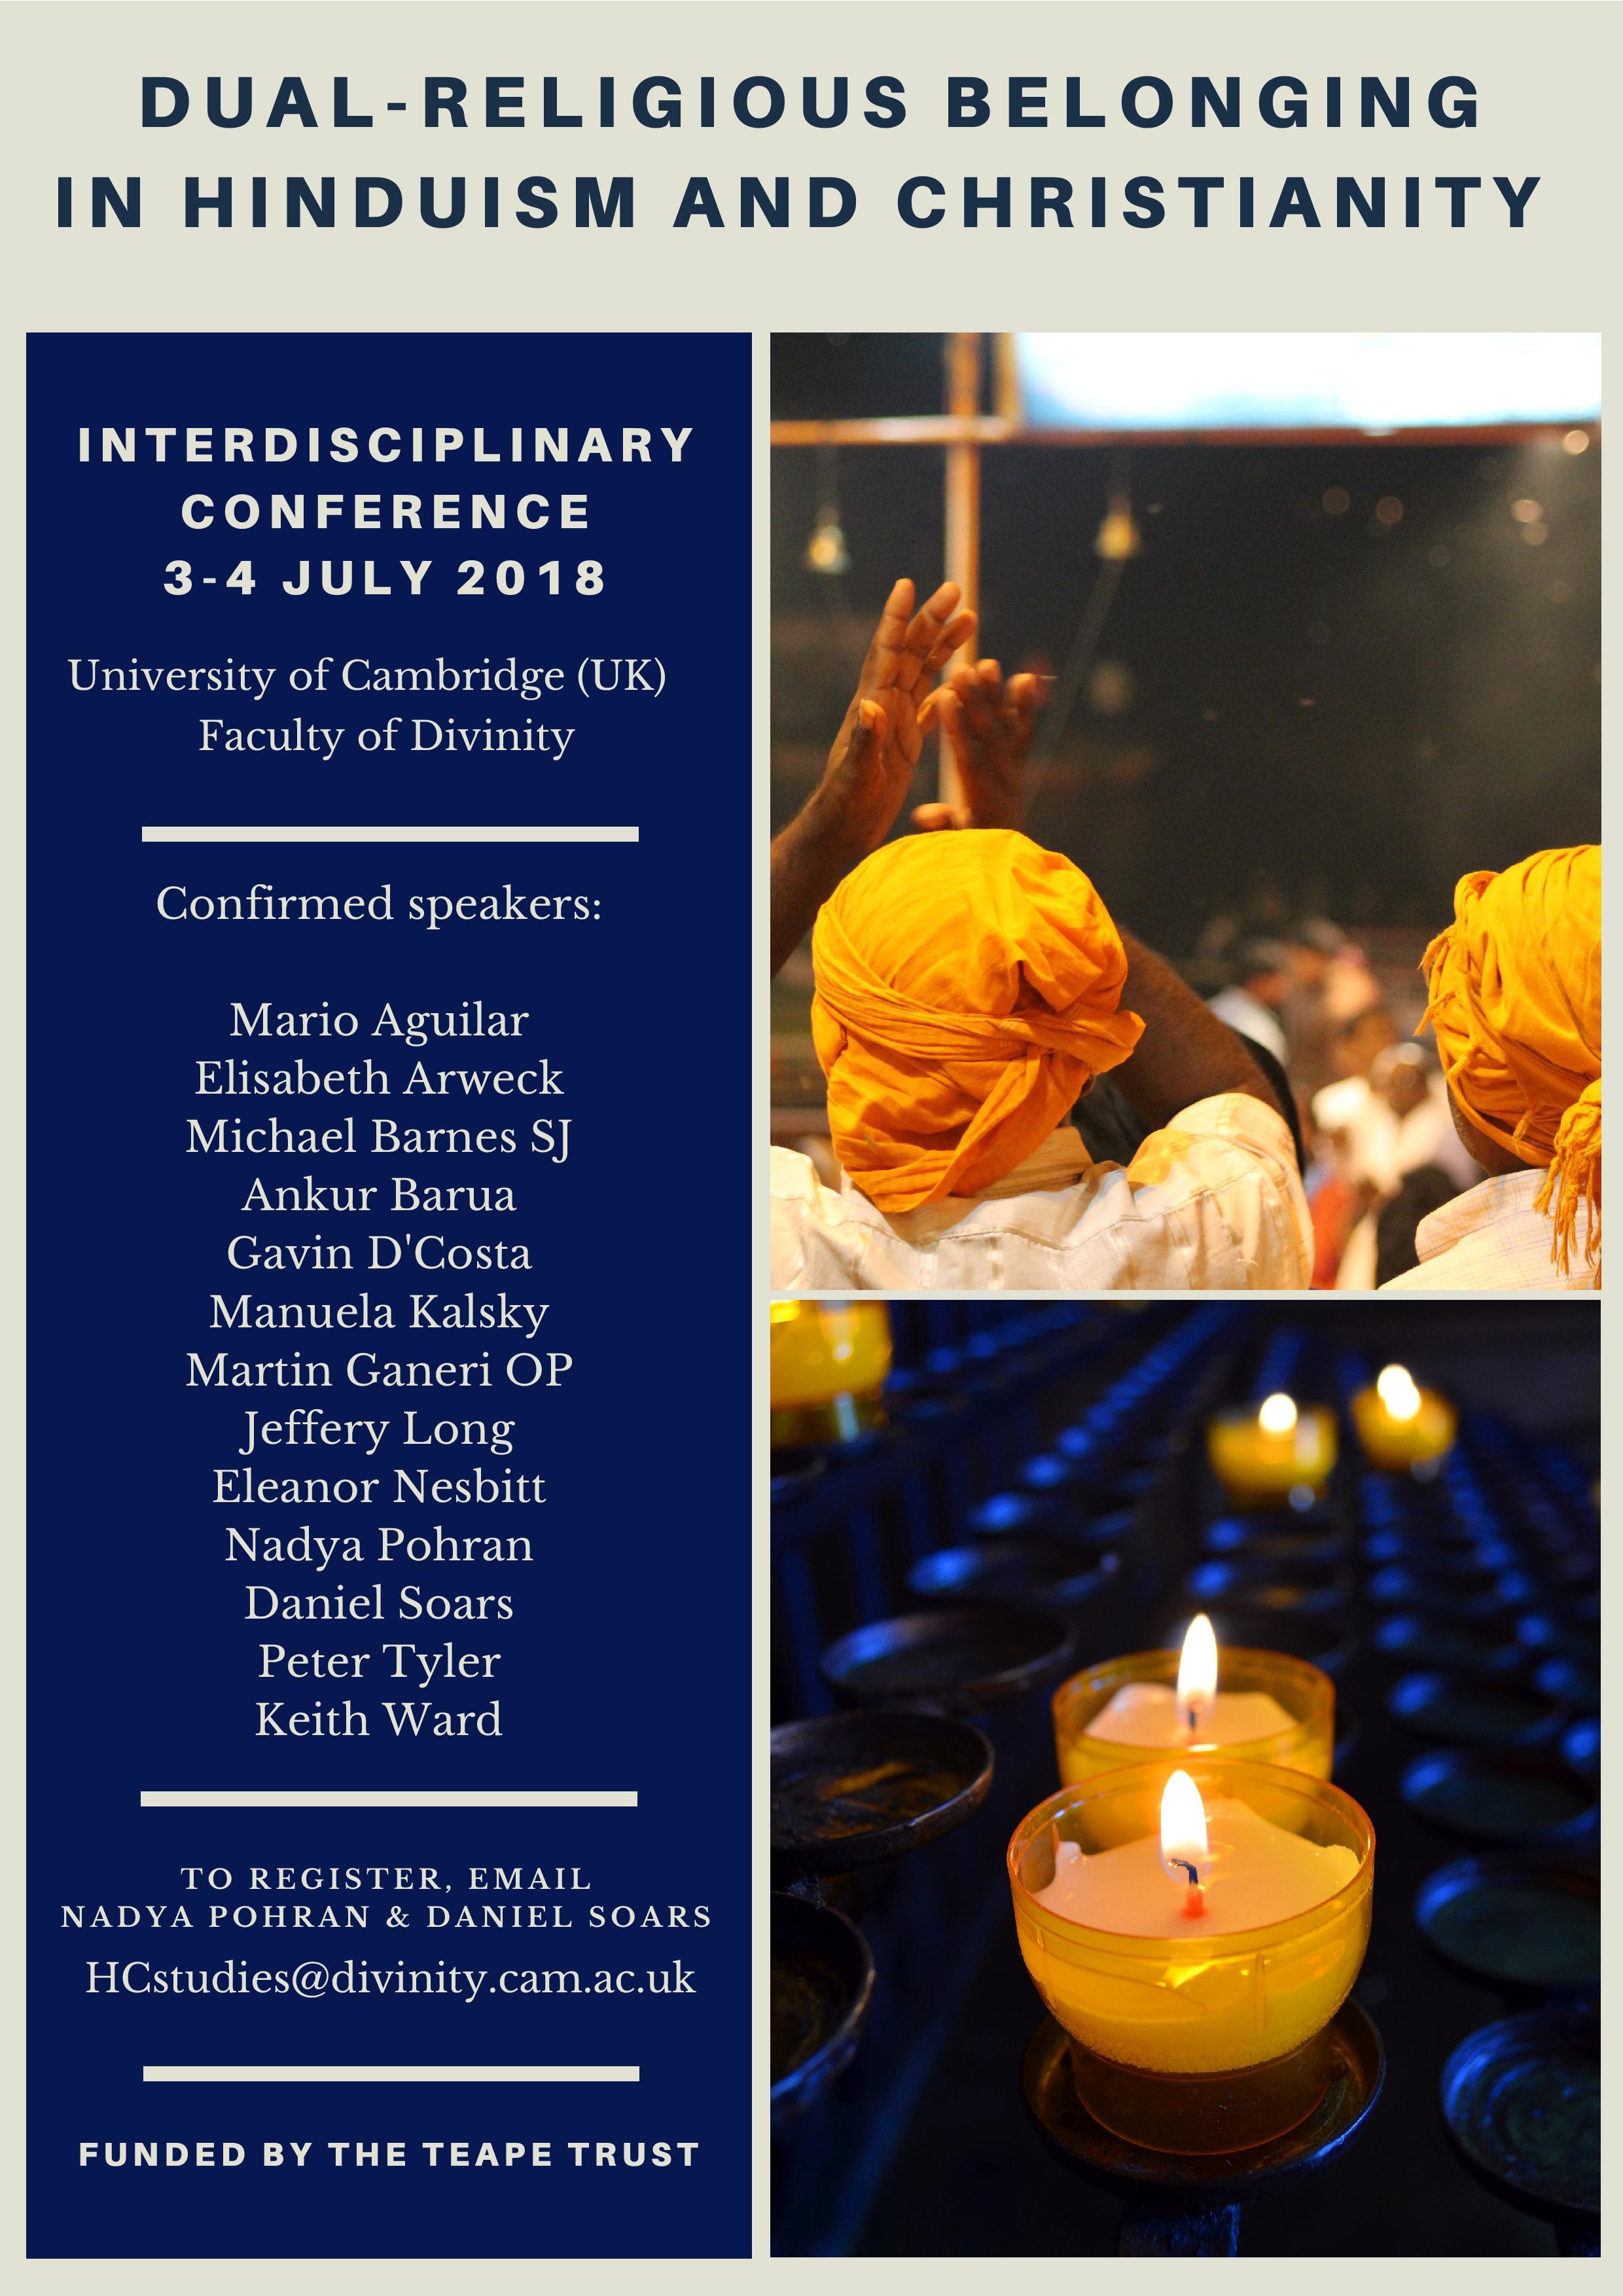 INTERDISCIPLINARY CONFERENCE 3 - 4 JULY 2018